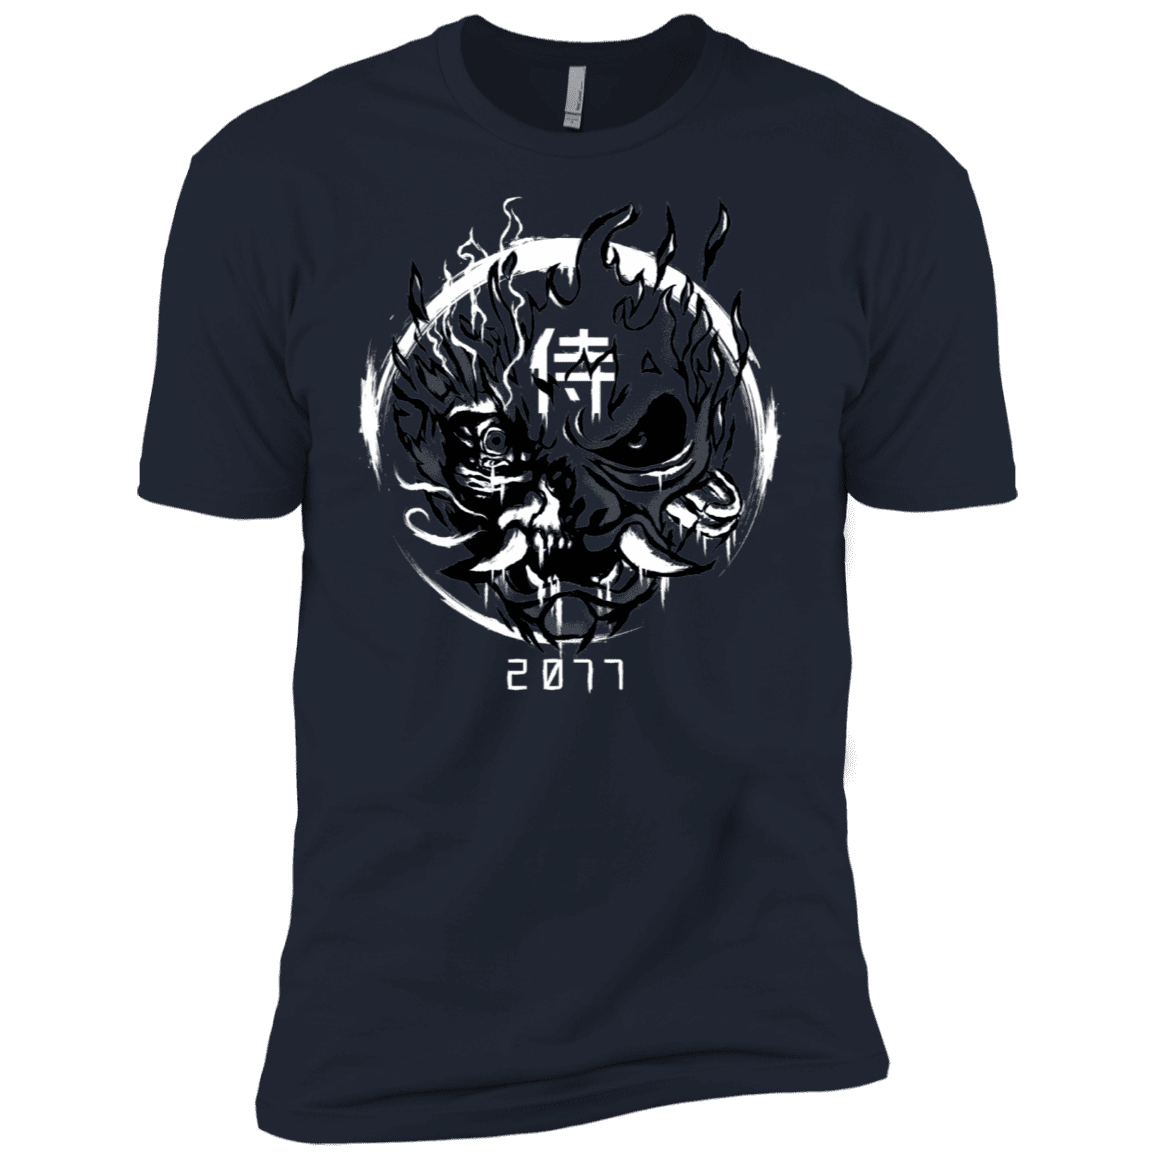 T-Shirts Midnight Navy / X-Small Samurai 2077 Men's Premium T-Shirt